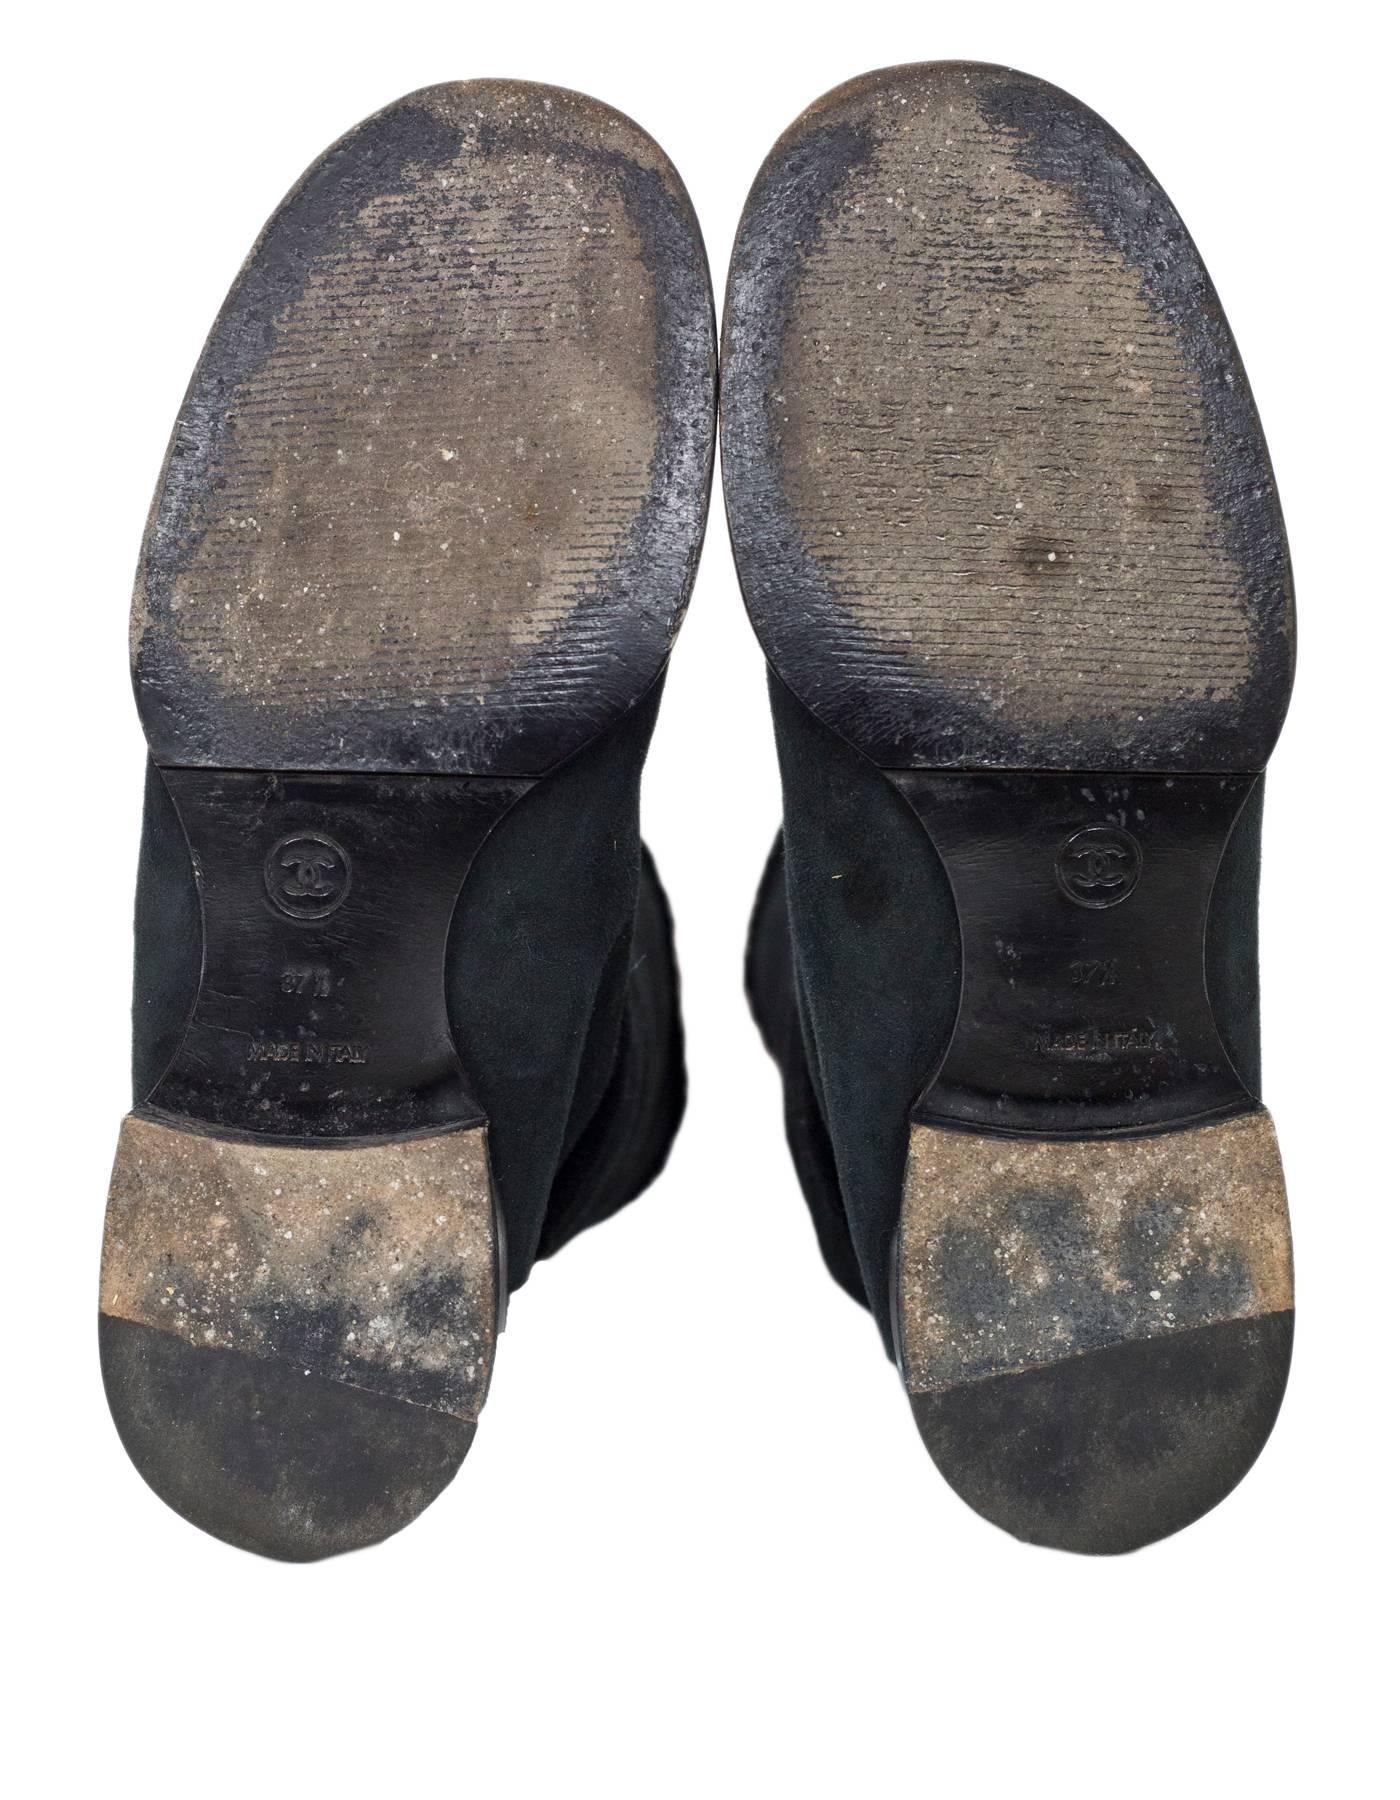 Chanel Black Shearling Short Boots Sz 37.5 1